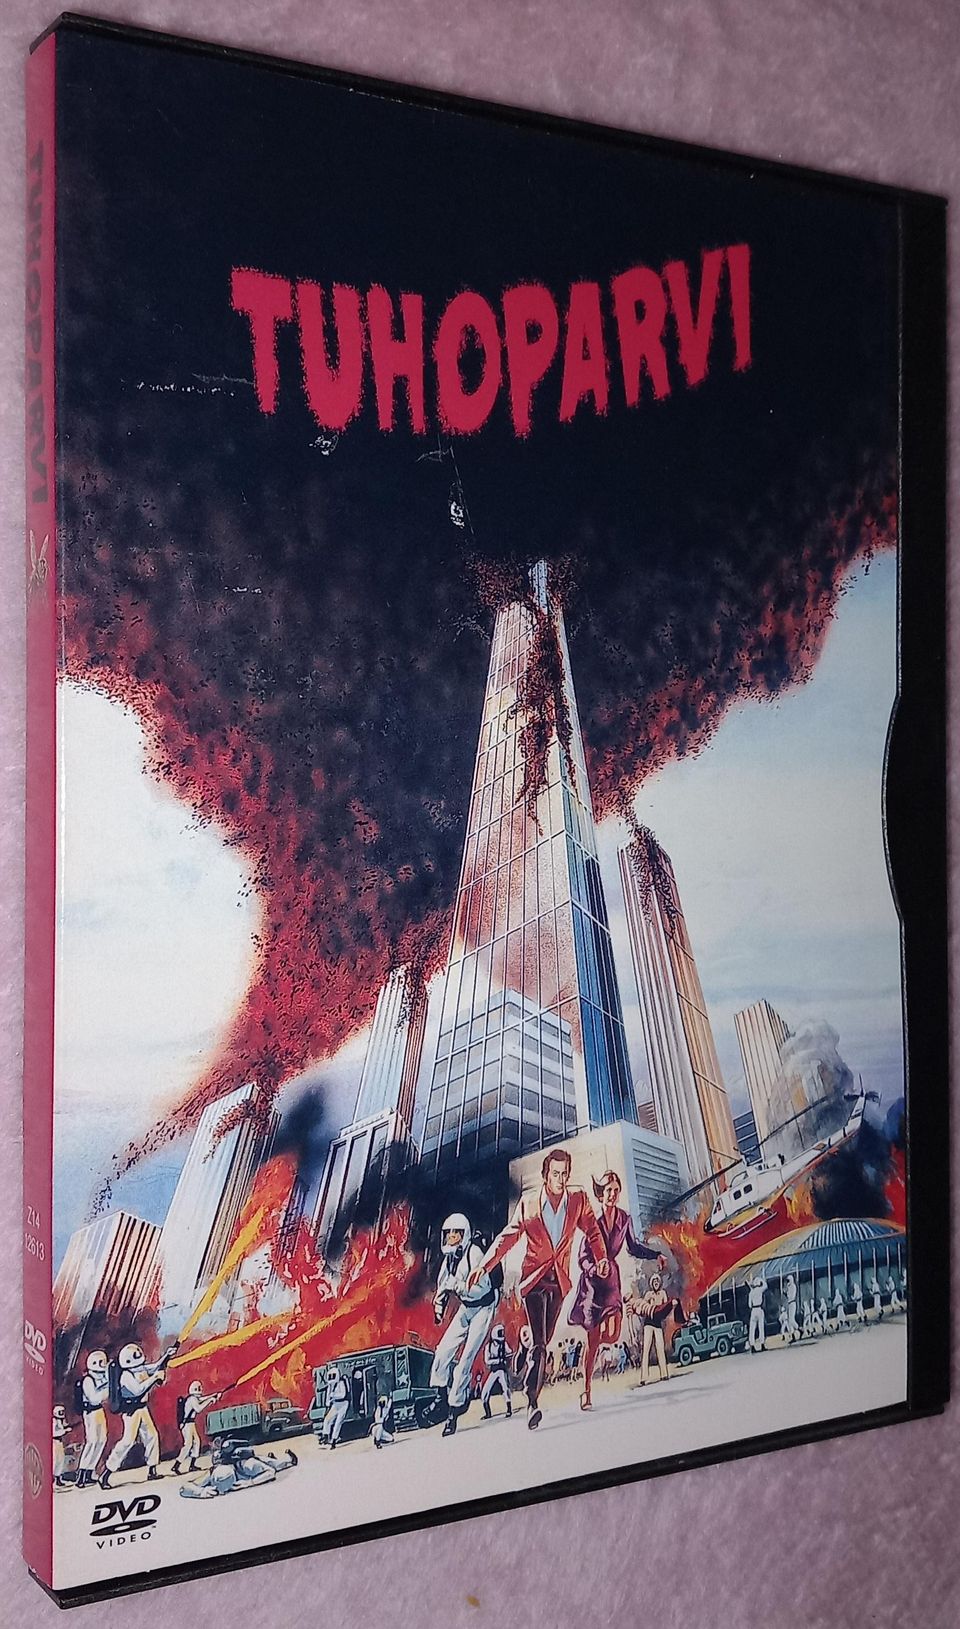 Tuhoparvi DVD,  1978